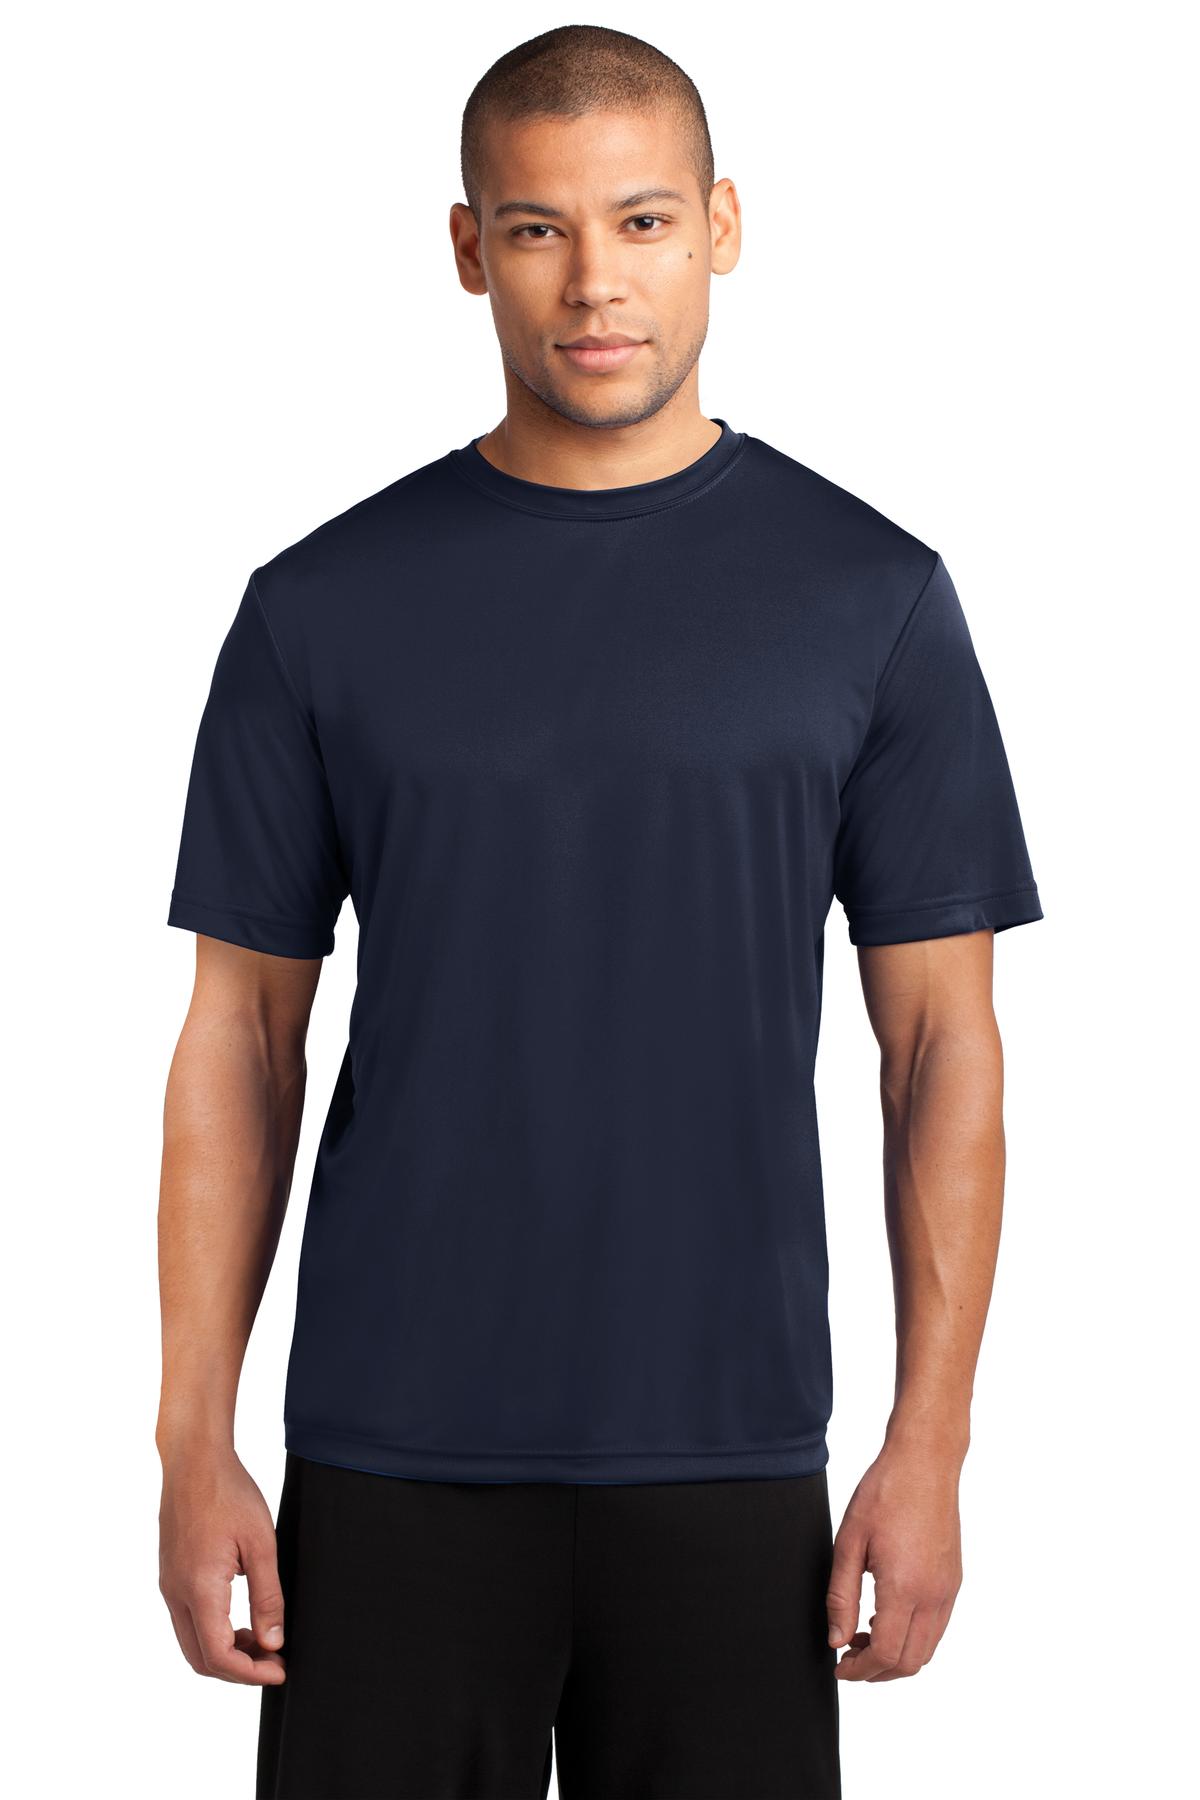 Port & Company Activewear T-Shirts for Hospitality ® Performance Tee.-Port & Company